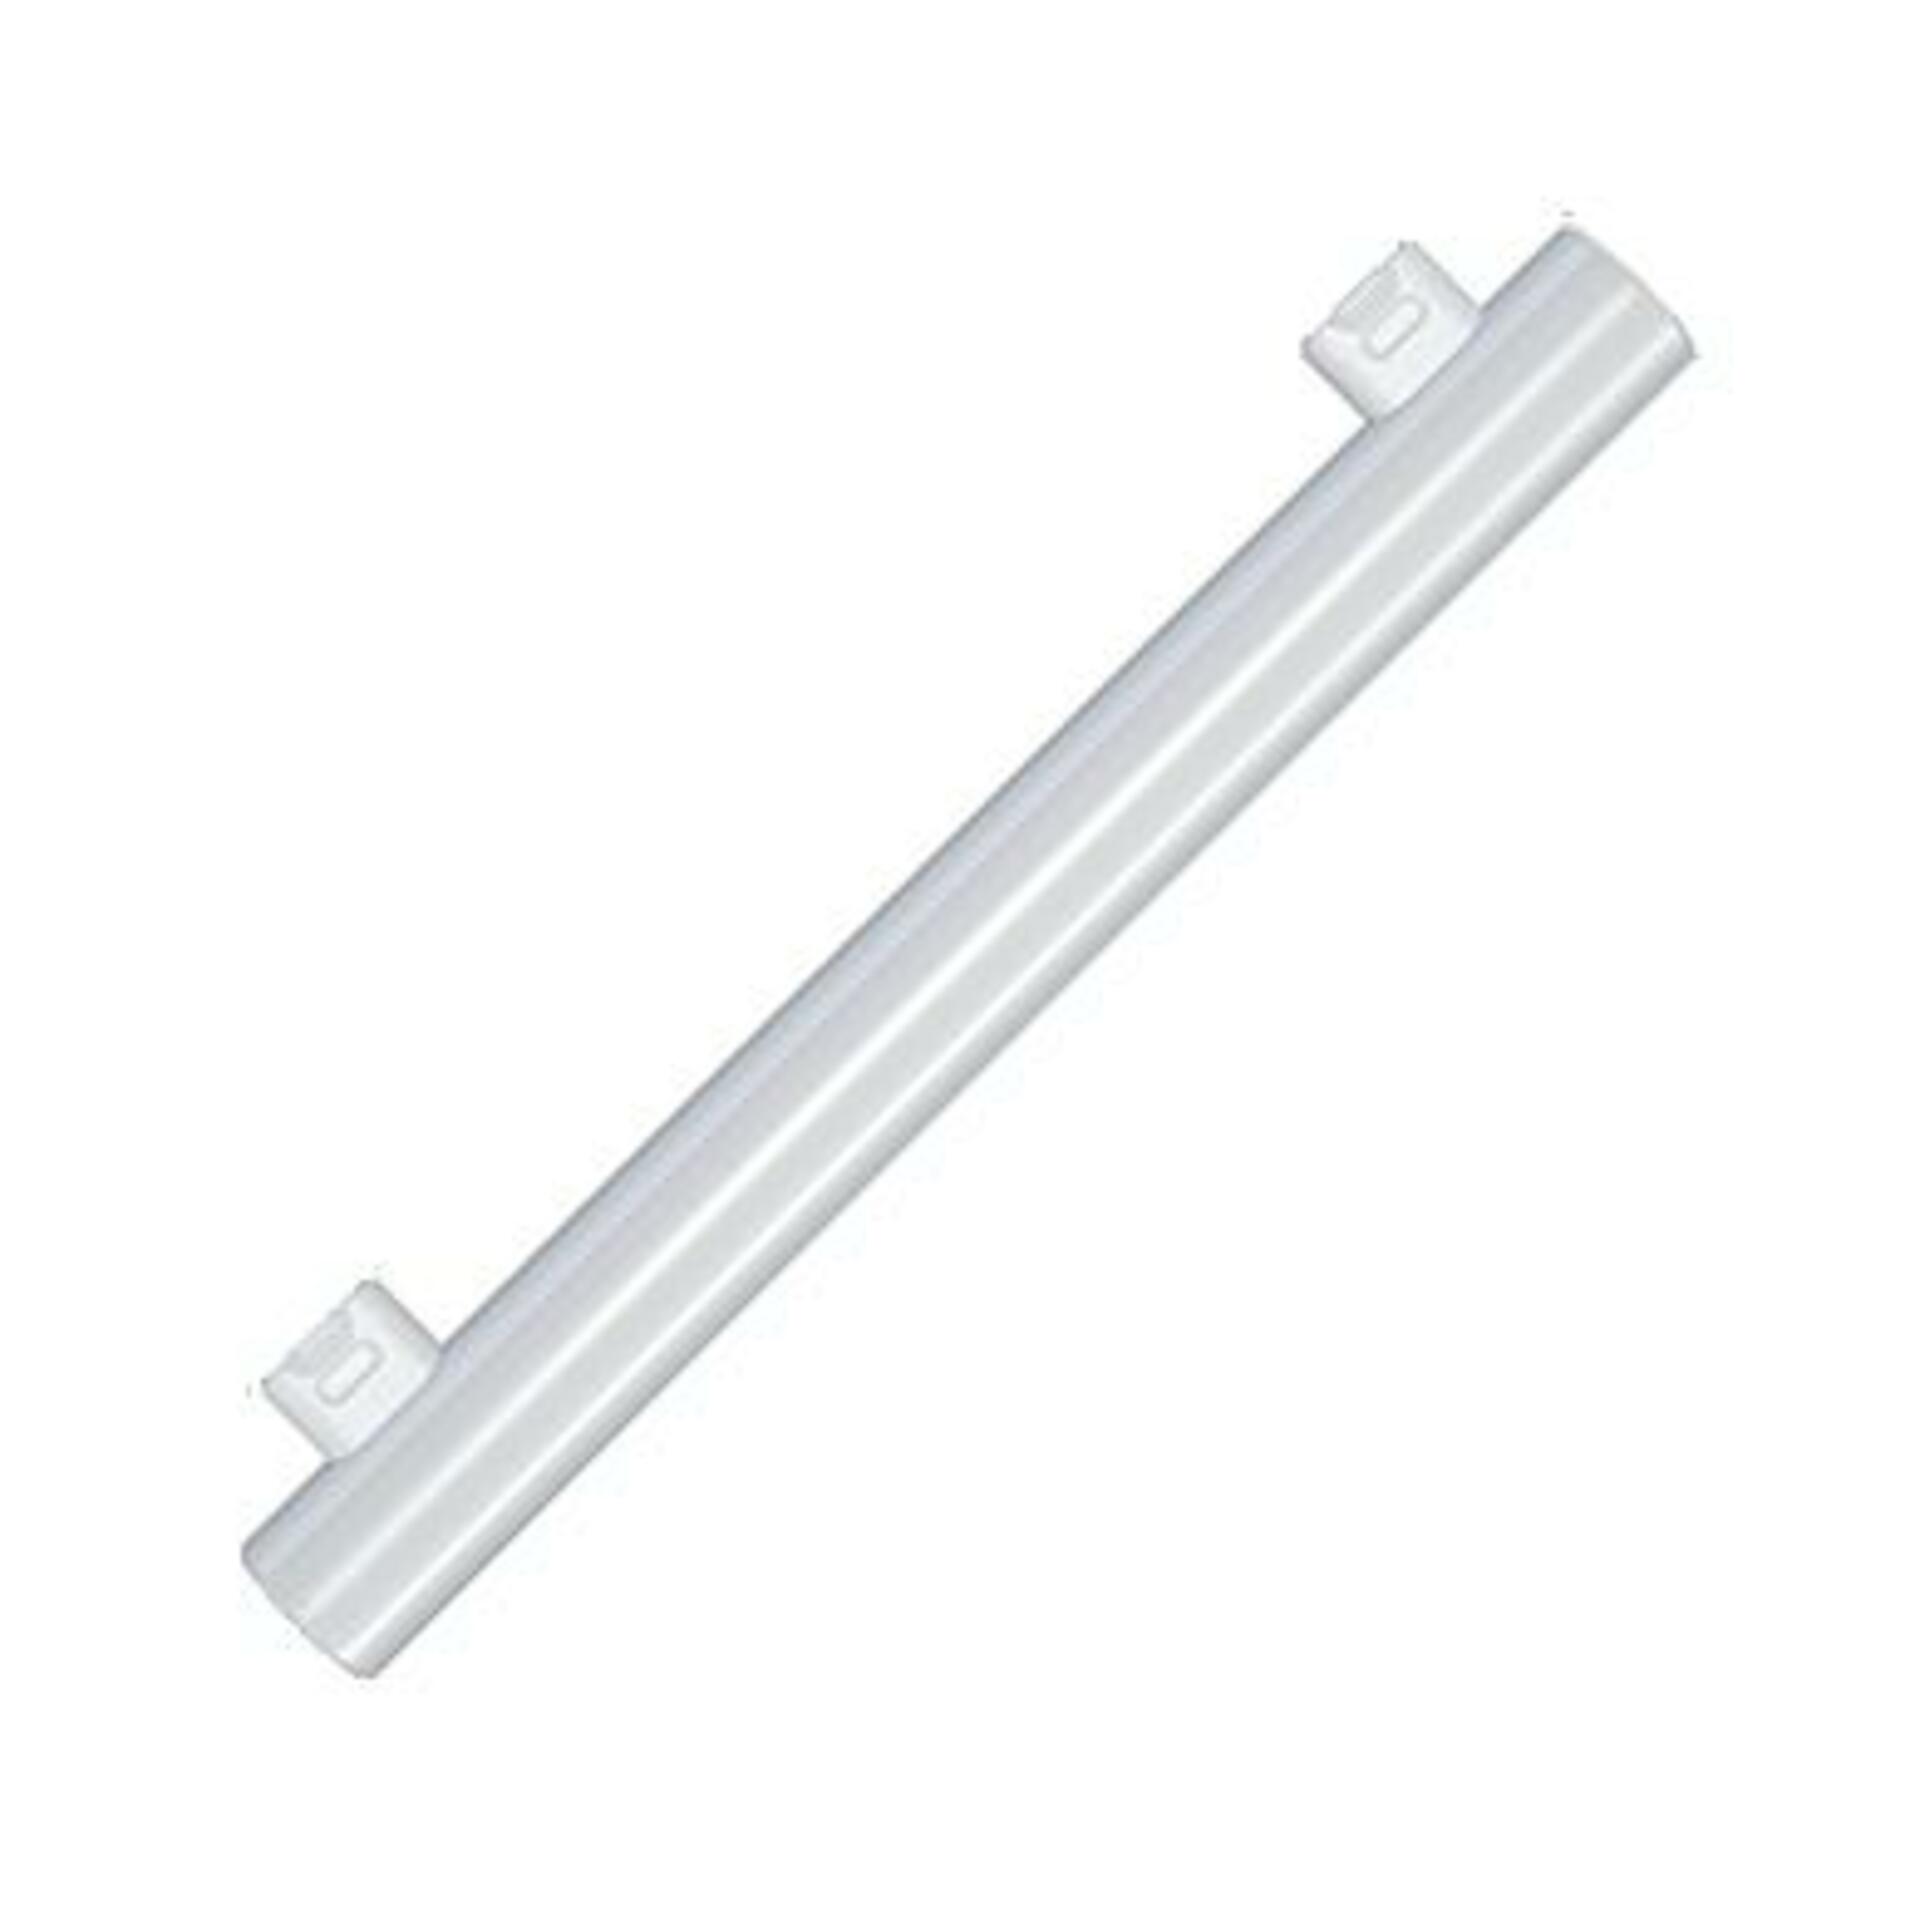 NBB LQ-S LED žárovka 5W/827 S14s DuoLINE - náhrada za žárovku 35W S14S, délka 30cm, 2 patice 259100010